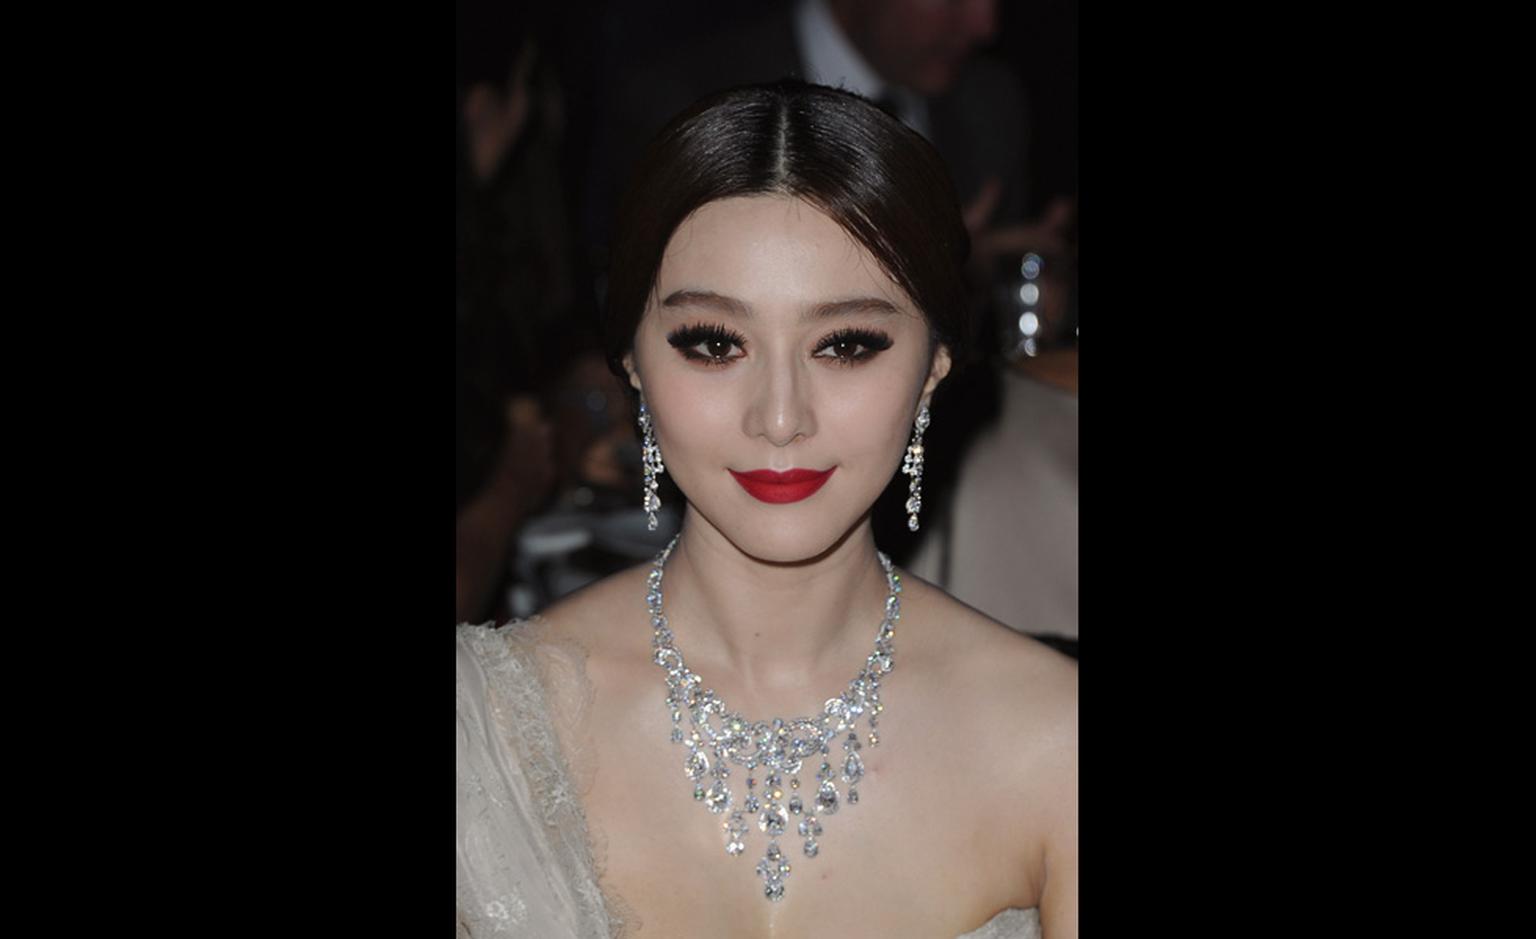 Fan Bingbing attended the Cartier launch event wearing a spectacular Sortilège de Cartier diamond necklace and earrings.